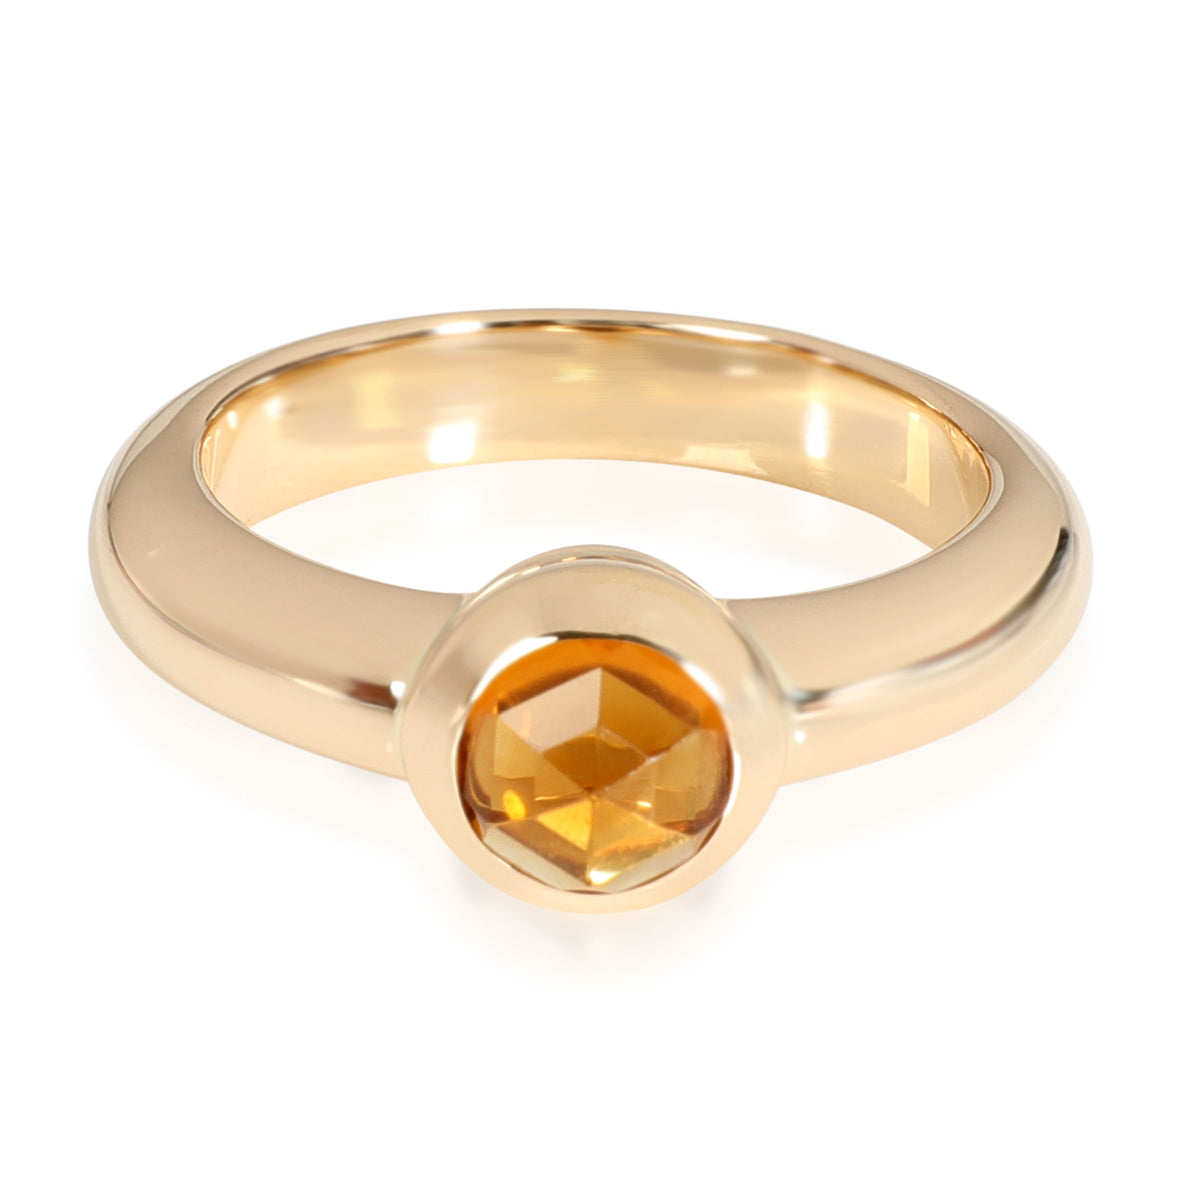 Tiffany & Co. Citrine Gemstone Ring in 18k Yellow Gold